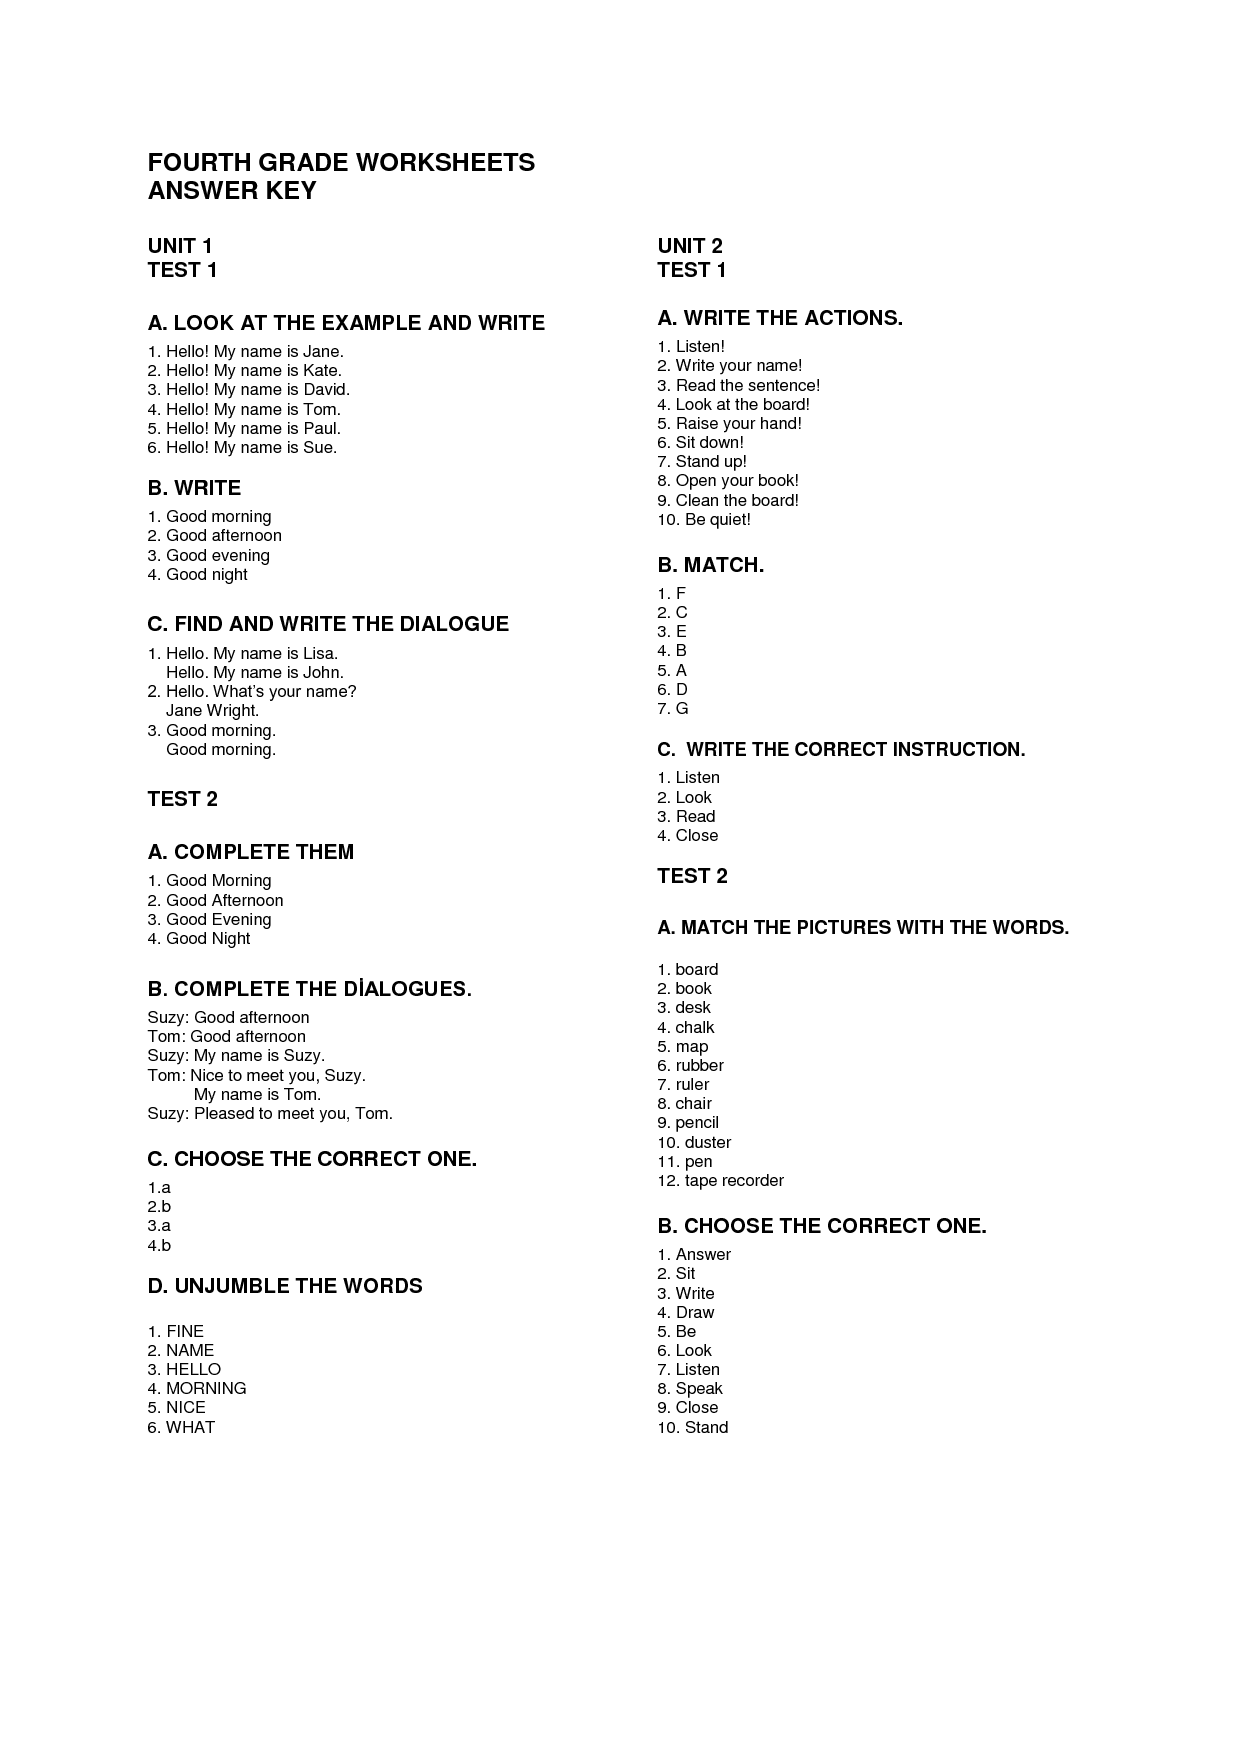 13-best-images-of-1st-grade-worksheets-answer-key-grade-1-math